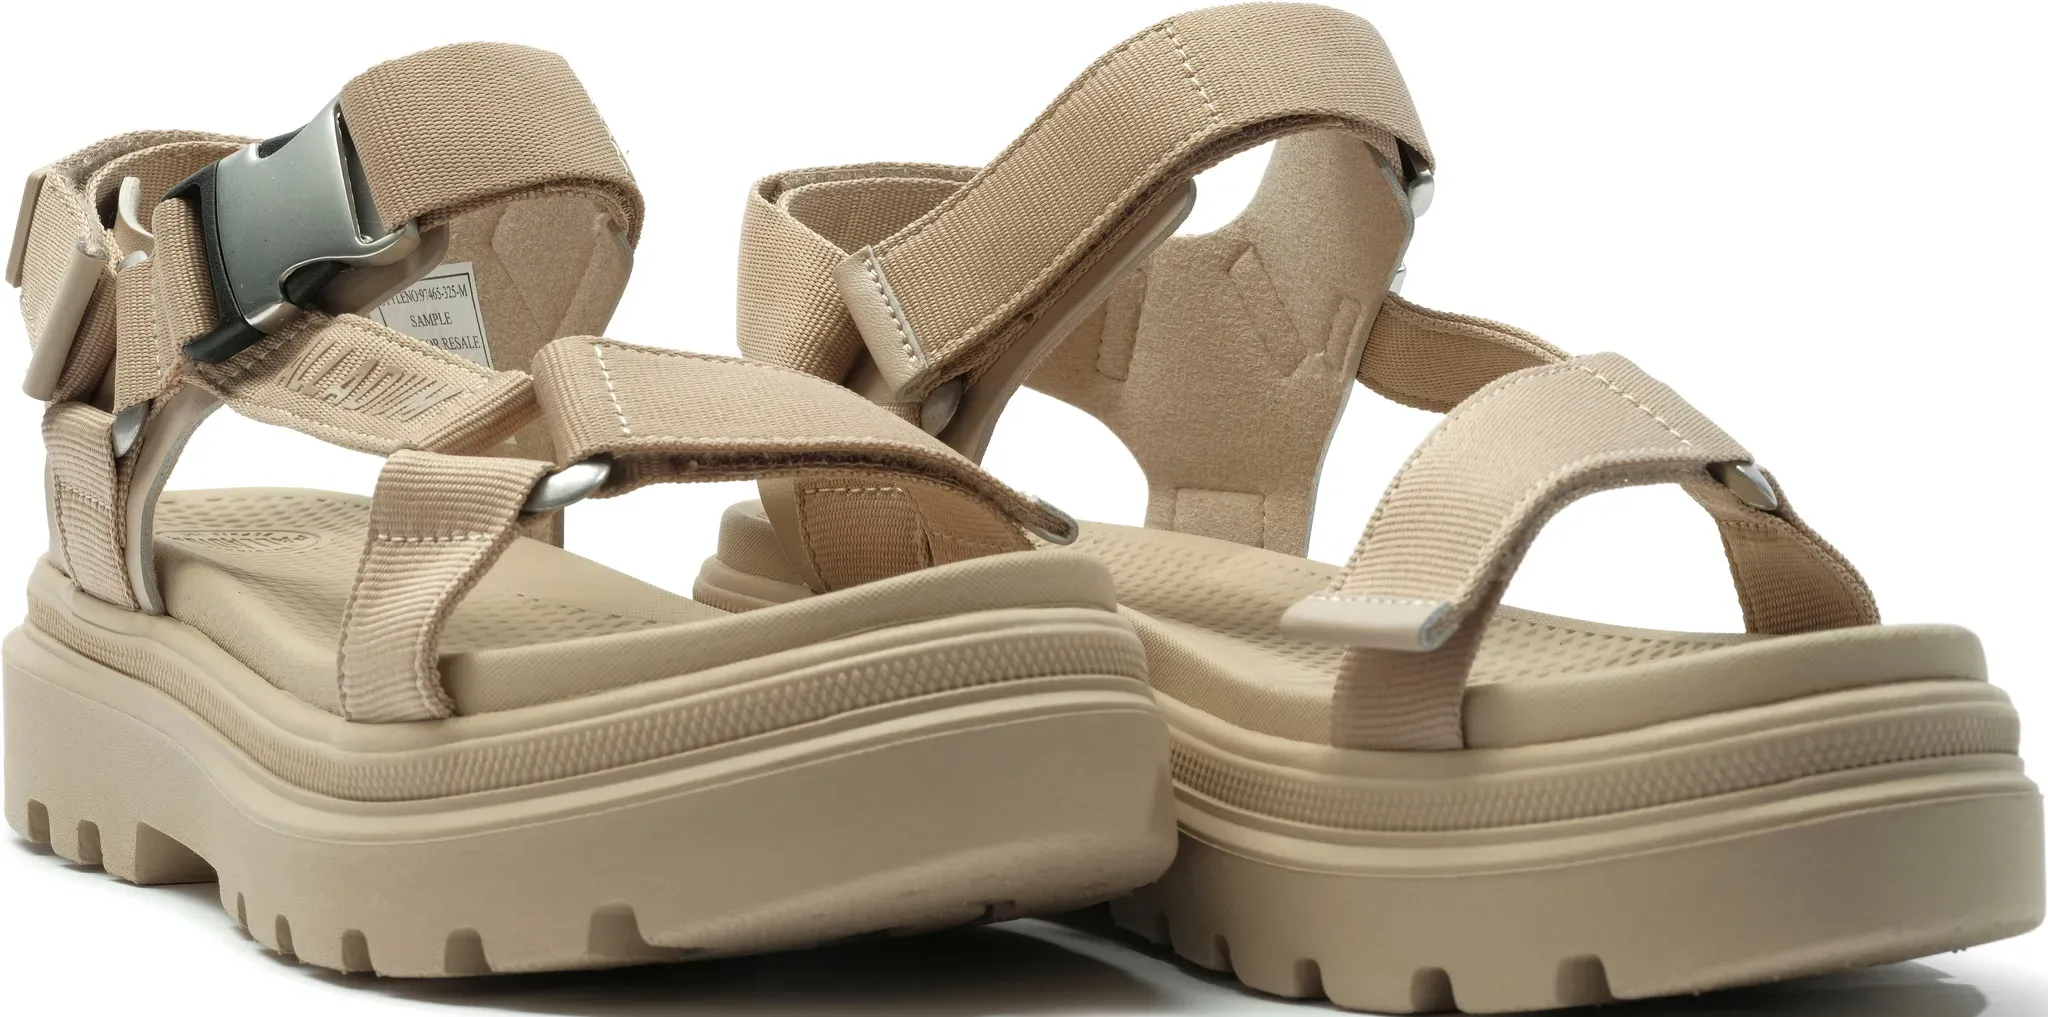 Sandale PALLADIUM "PALLACRUISE STRAP" Gr. 37, beige Schuhe Sandalen